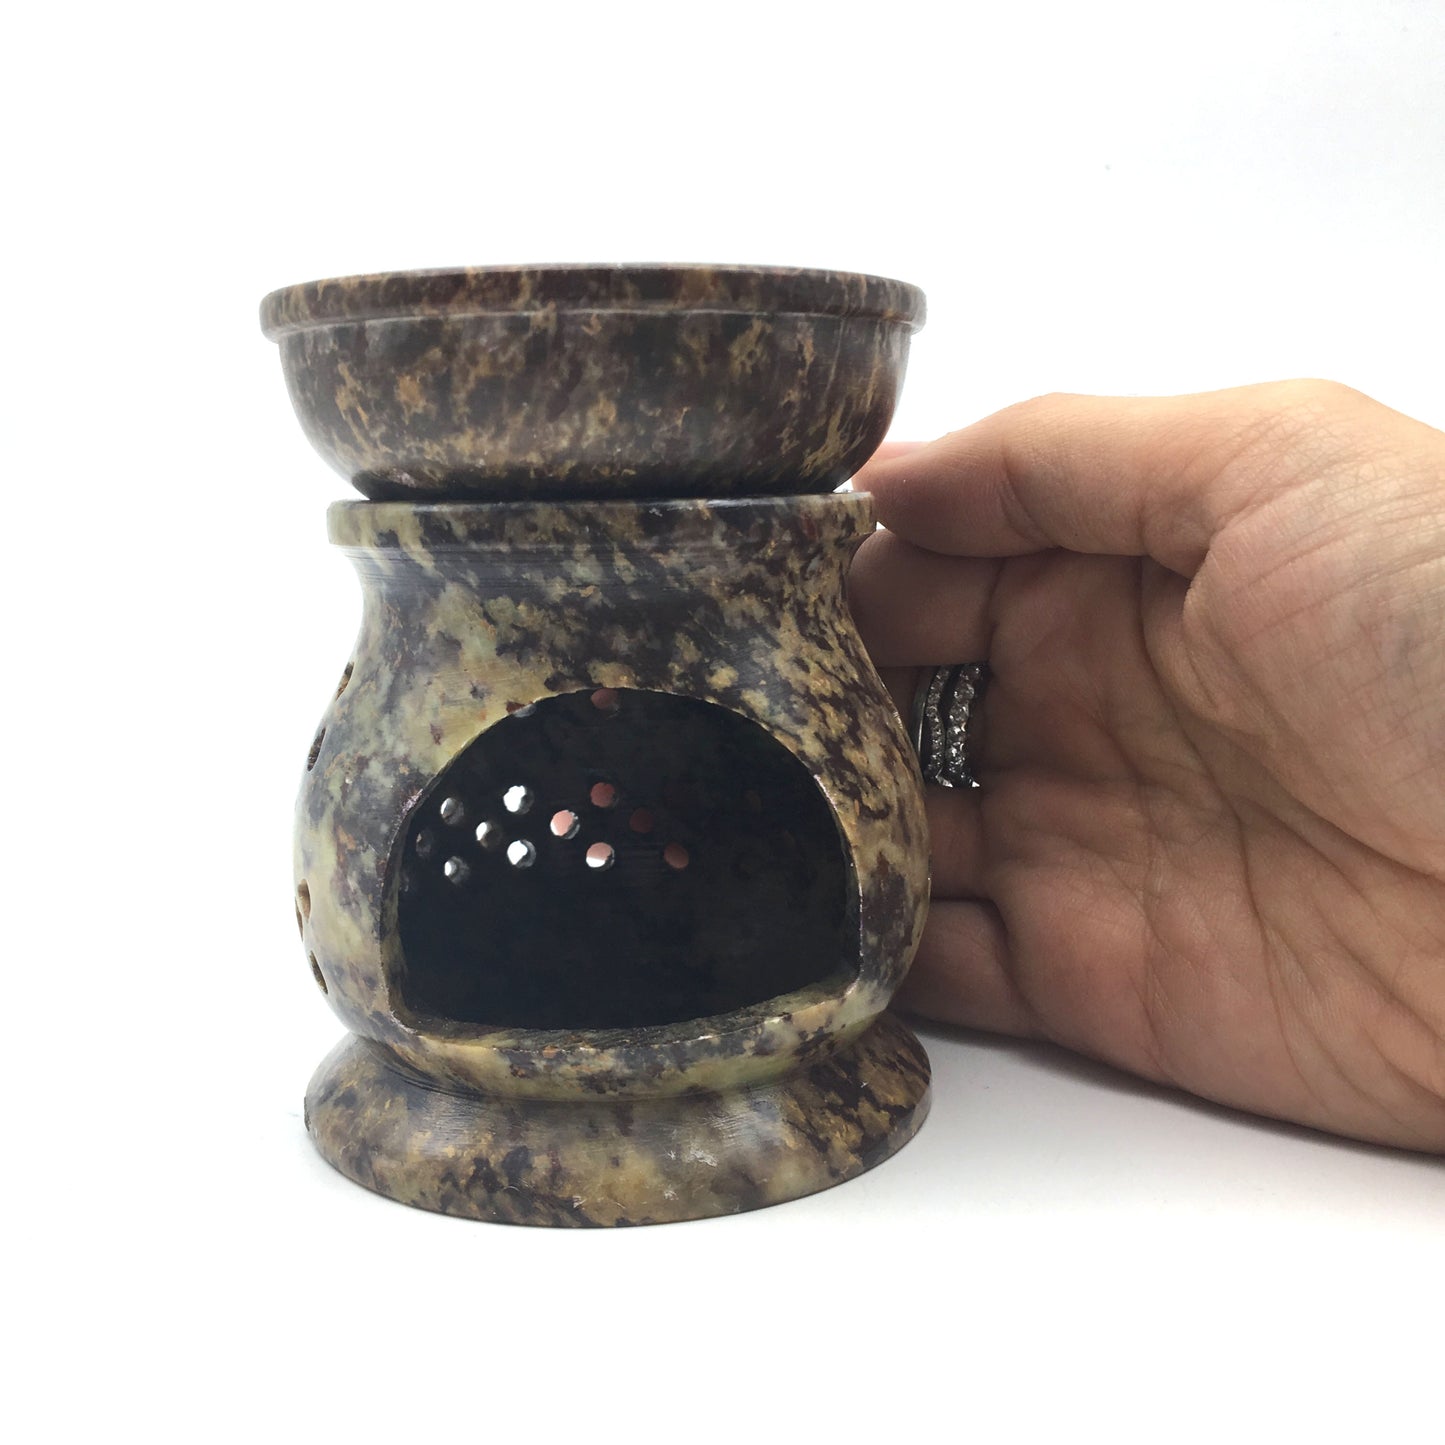 Soapstone India Handcrafted Decorative Oil Burner Diffuser burner 3.1" - Montecinos Ethnic